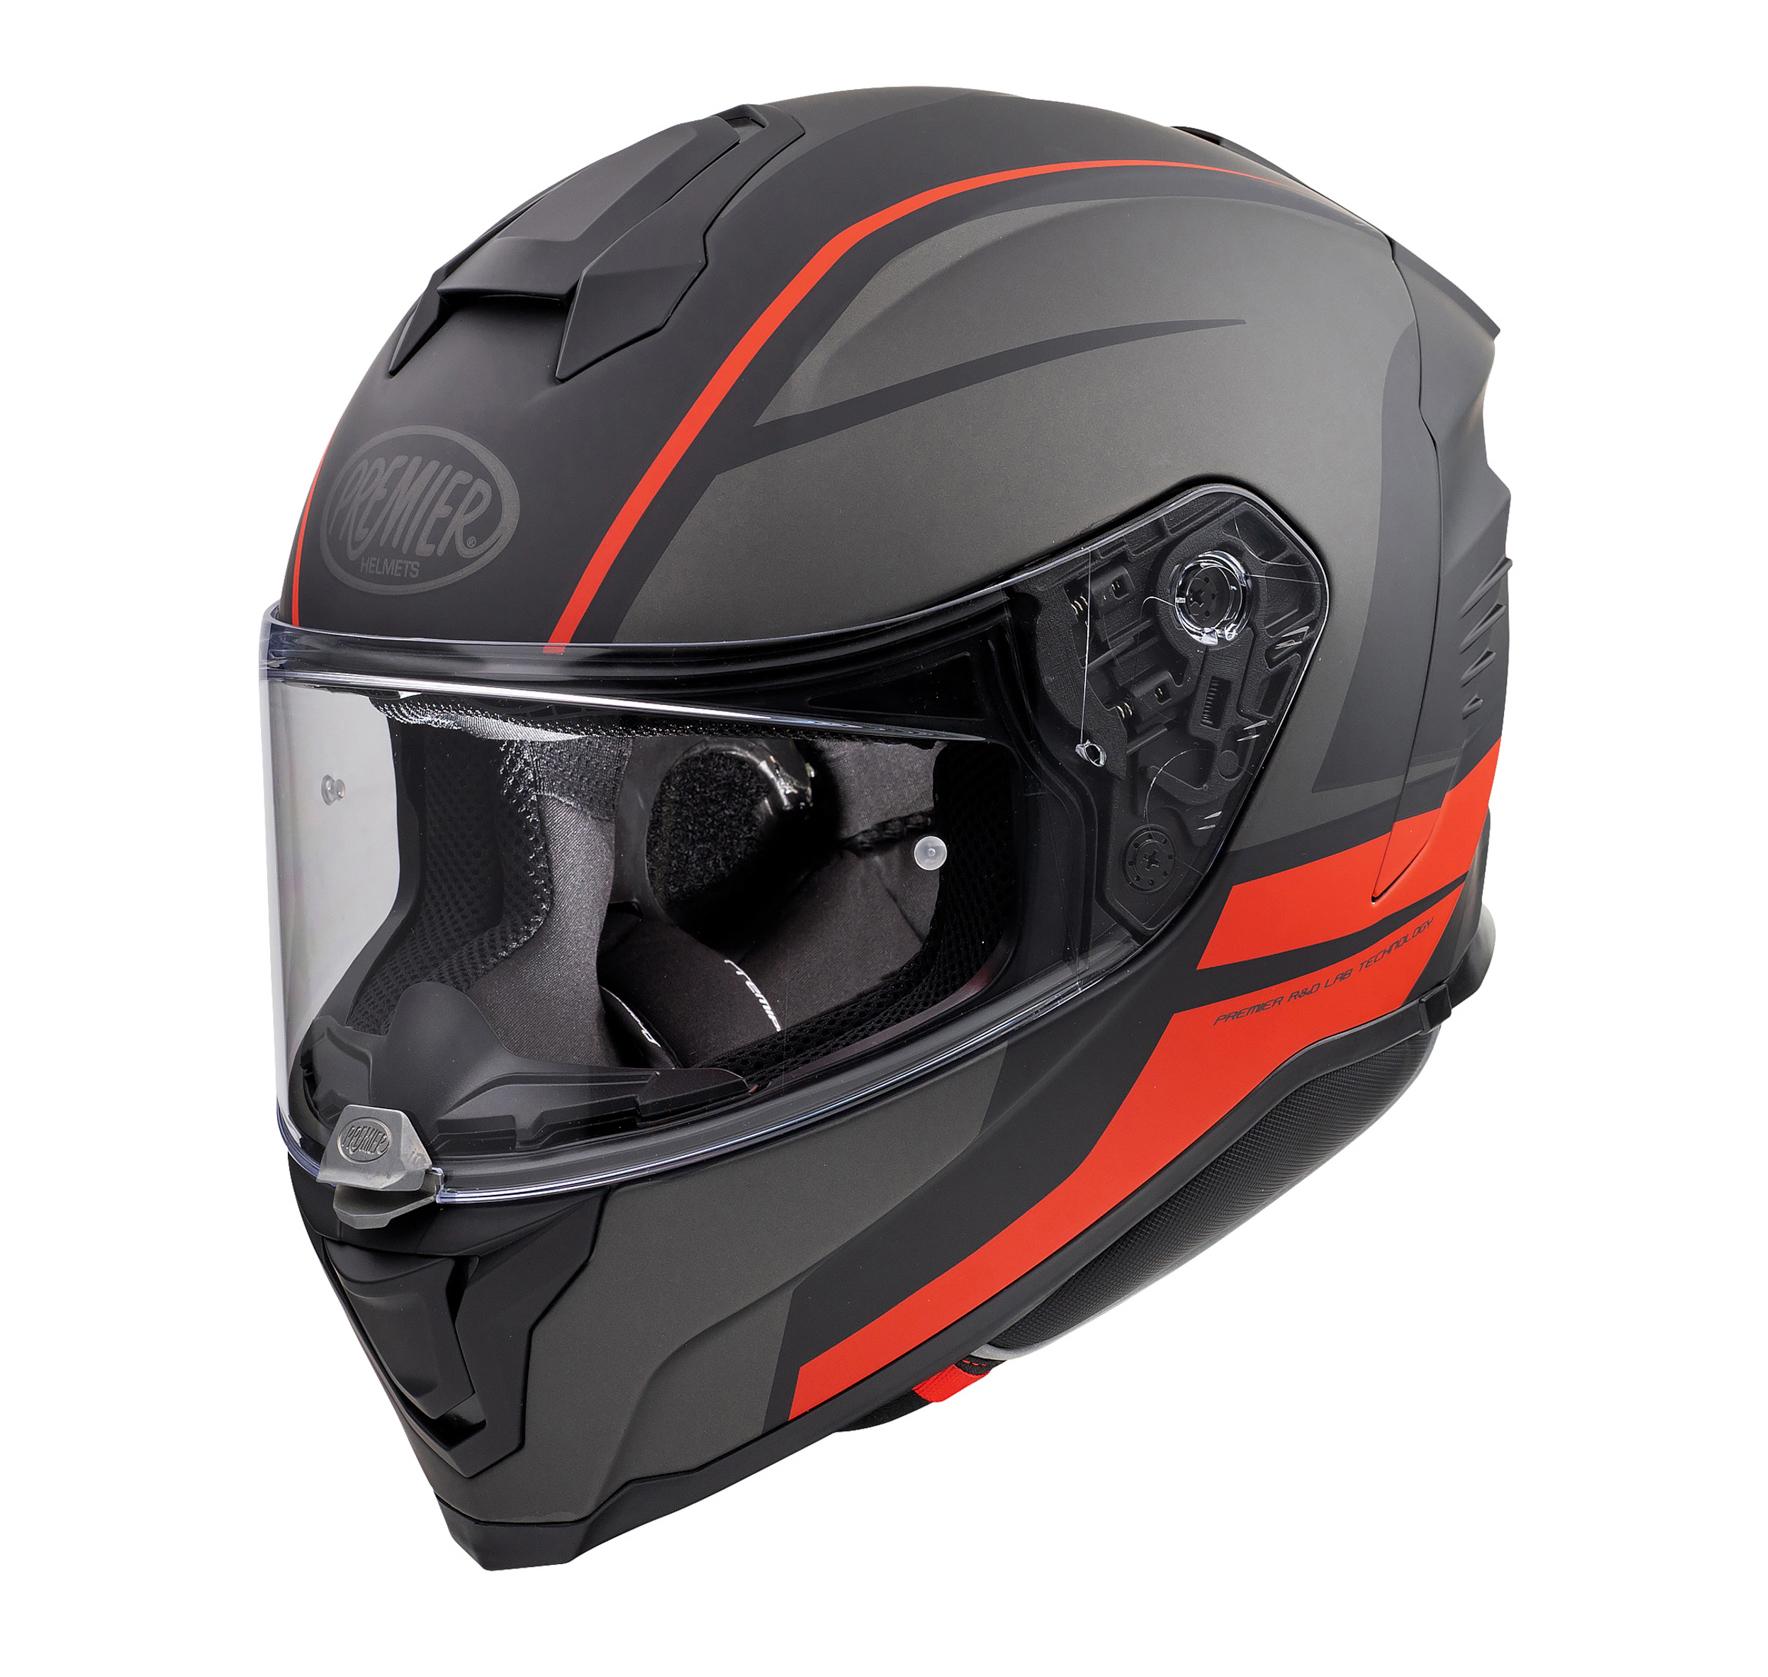 Premier Hyper De Full Face Motorcycle Helmet - Black/Red, Xl